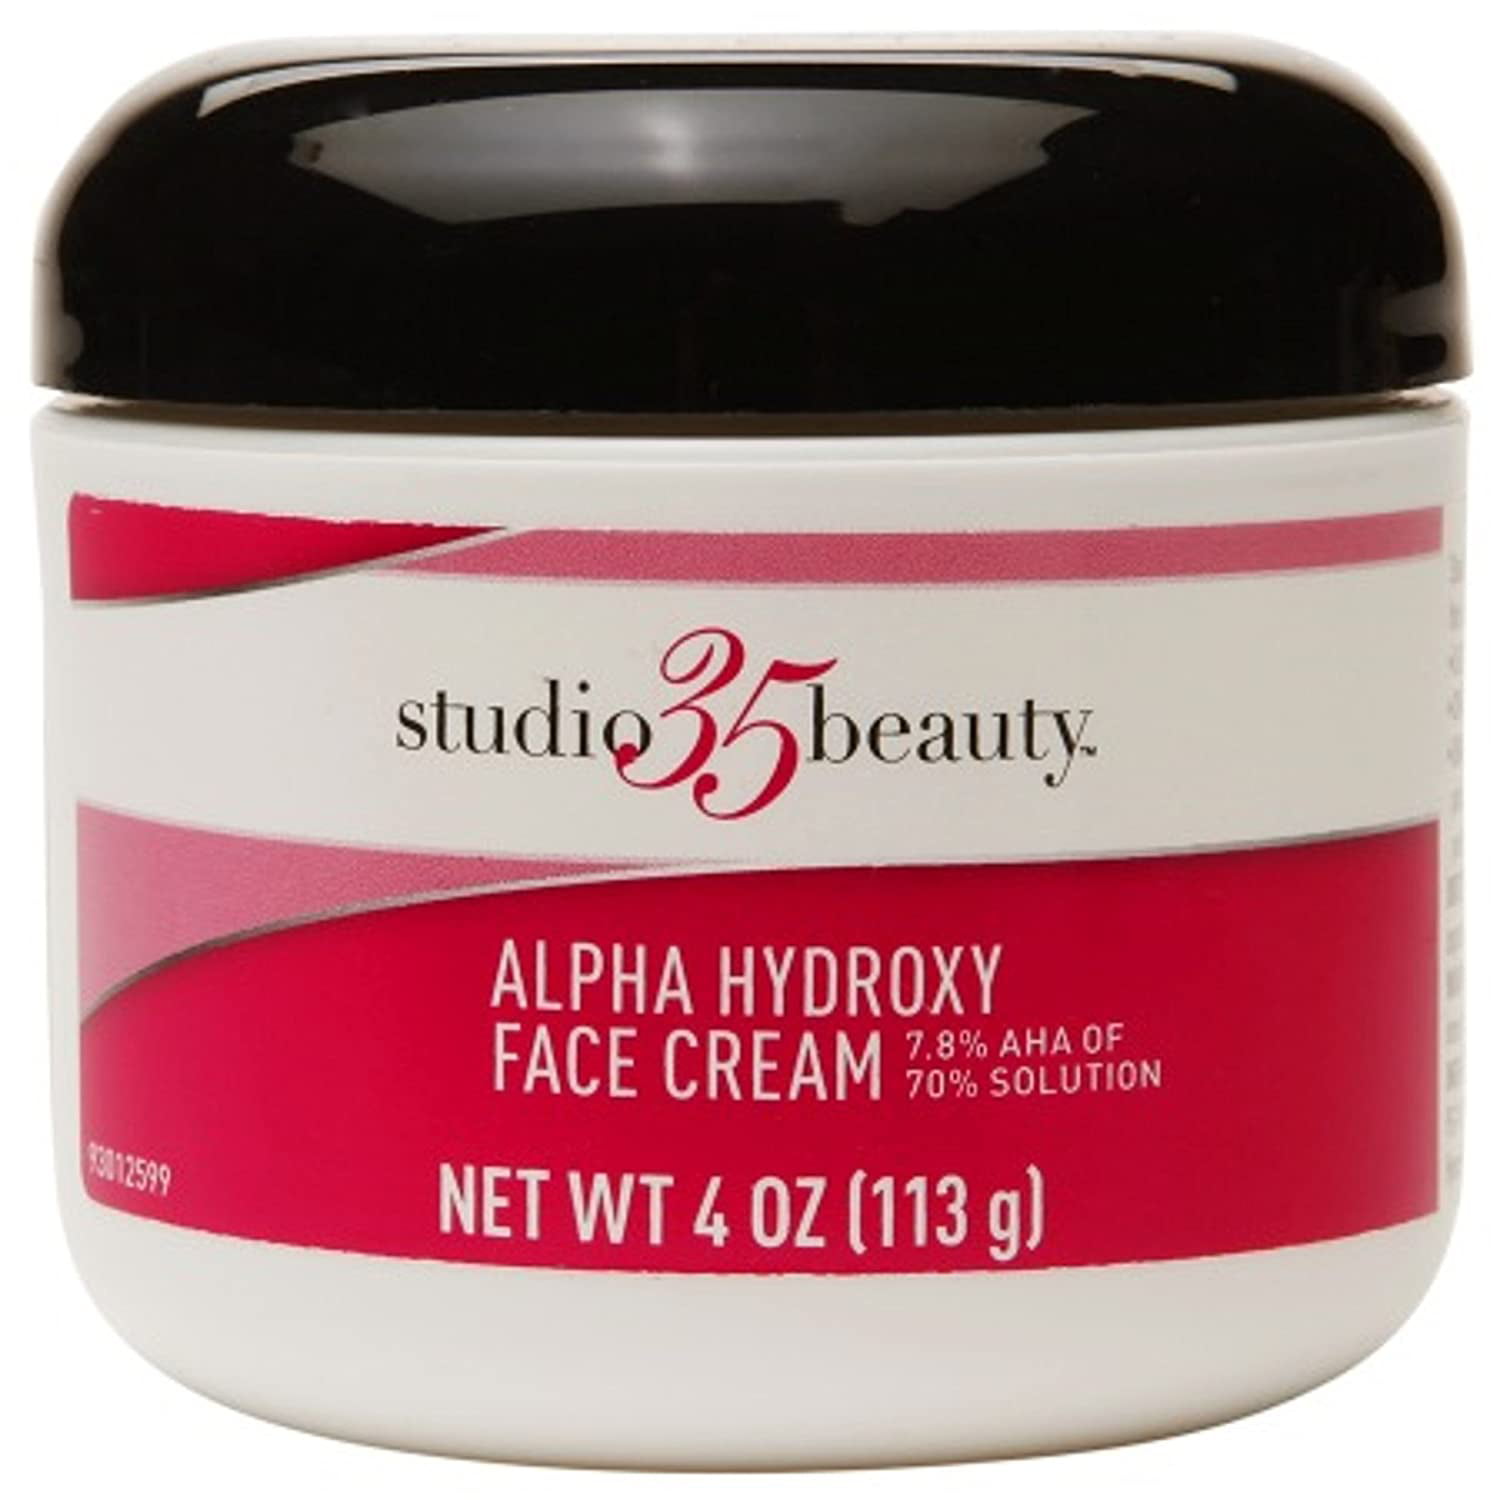 Studio 35 Beauty Alpha Hydroxy Face Cream 4 Oz Walmart Com